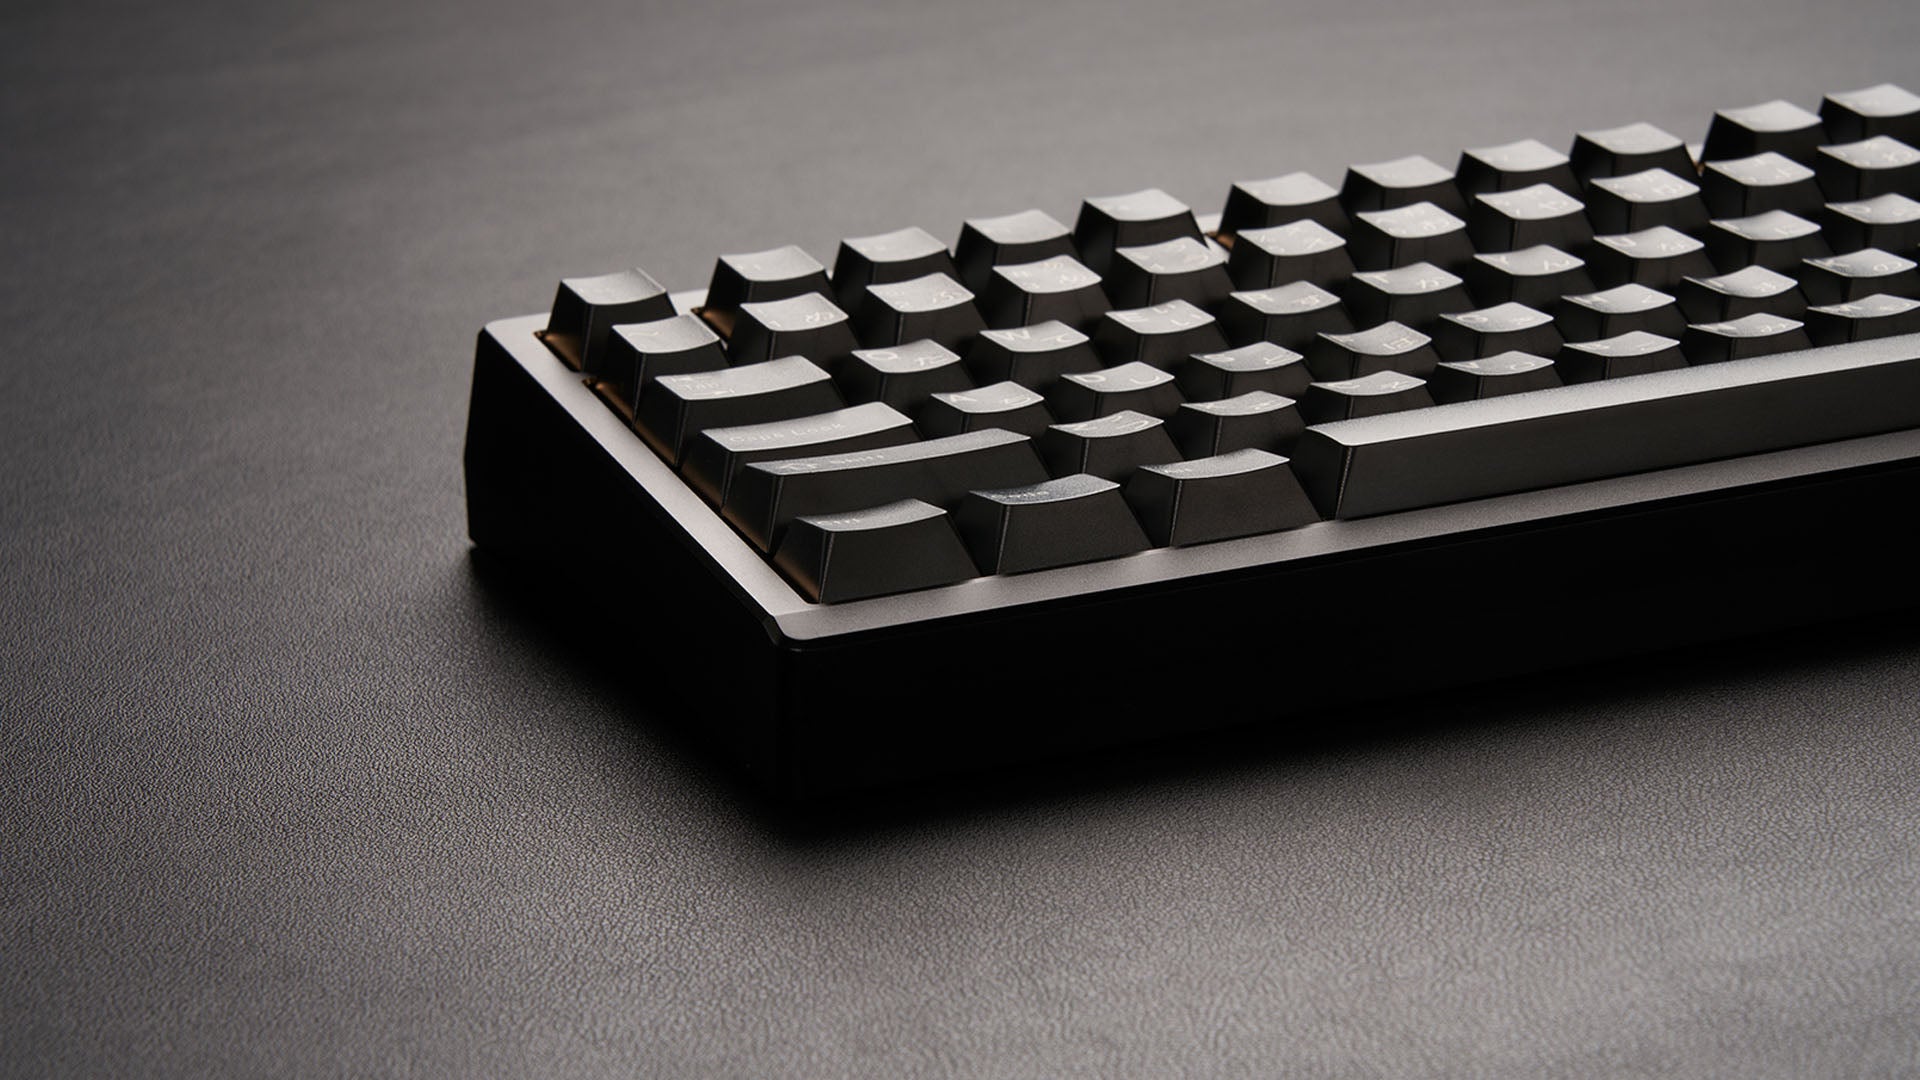 Zoom75 SE Keyboard - Anodized Black [Preorder]